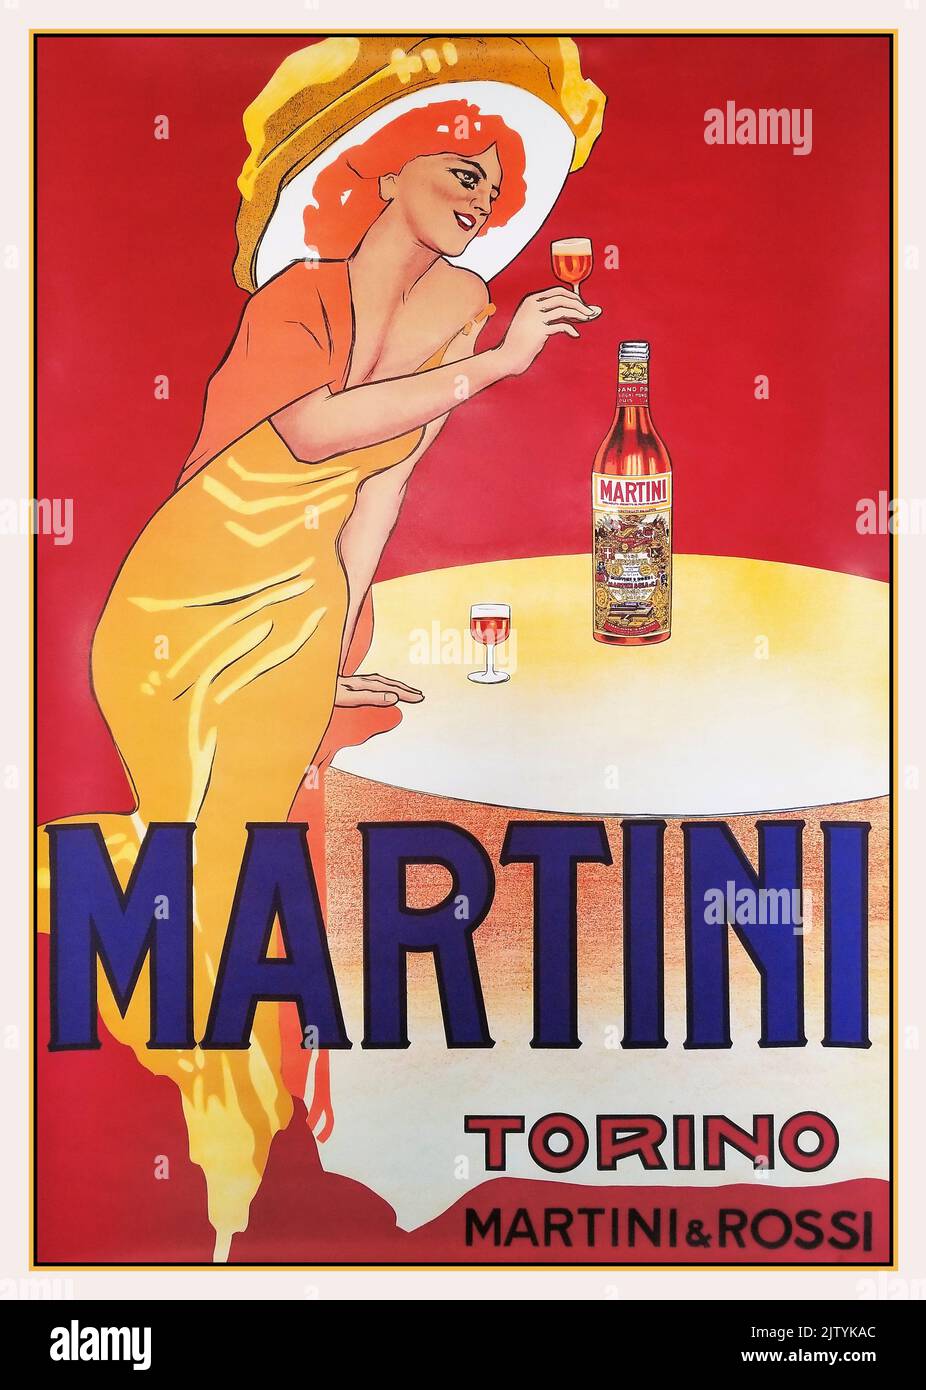 MARTINI 1900 affiche lithographique italienne Art déco Martini Vermouth Martini & Rossi boissons apéritif affiche ancienne, Tipografia Teatriale Torinese, Turin, Italie affiche Vintage 1900s Martini Drinks Banque D'Images